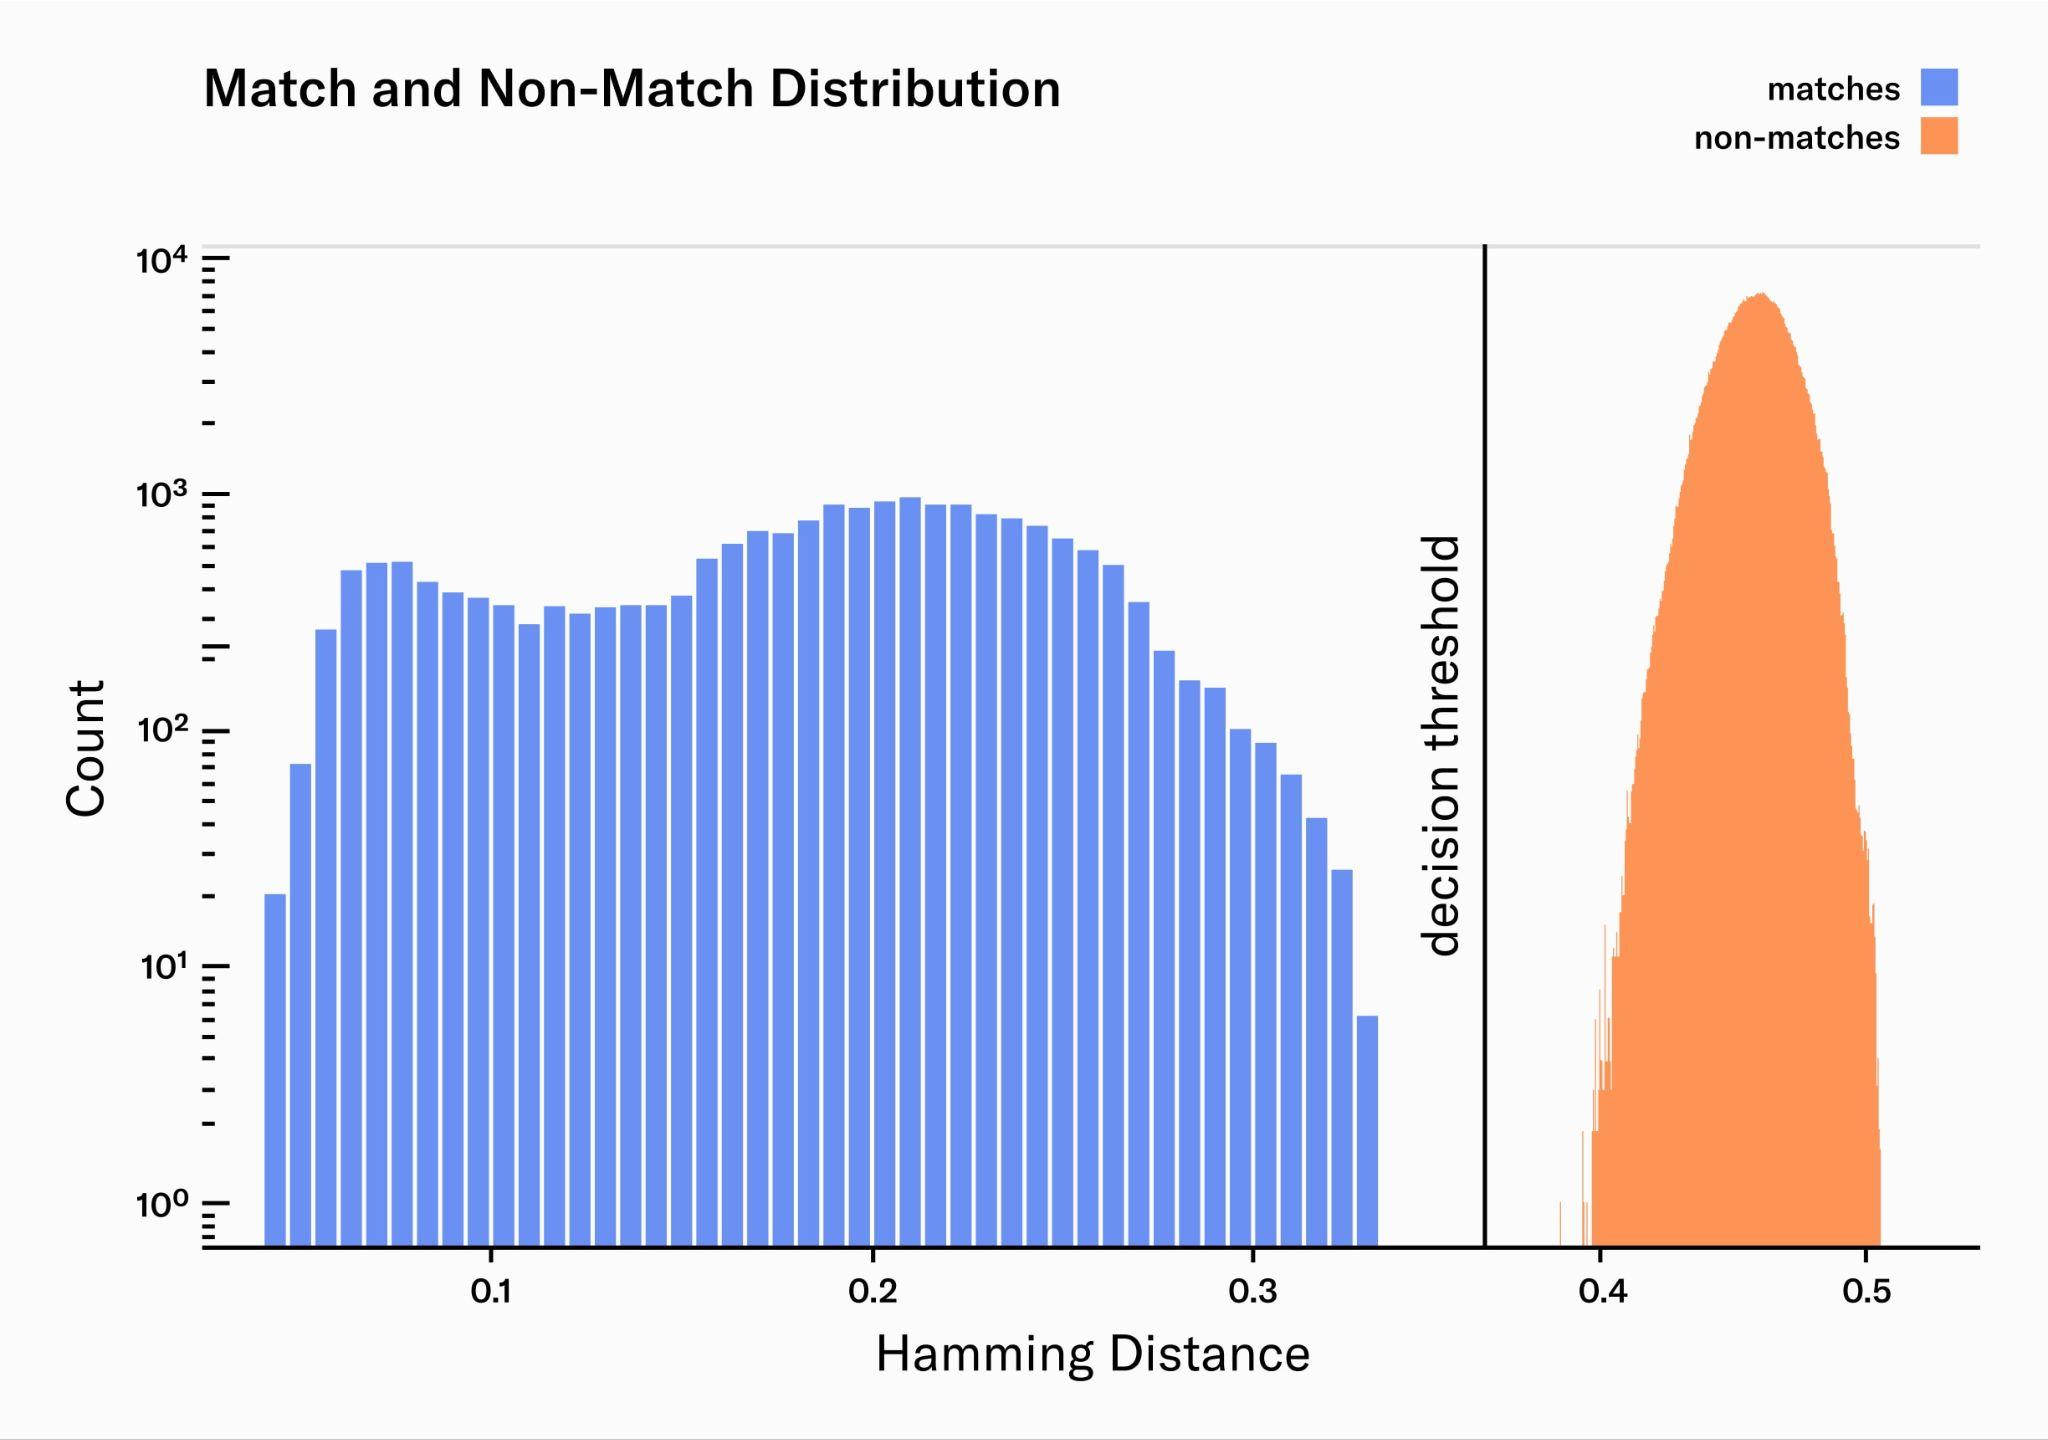 Figure 29: Match and Non-Match Distribution